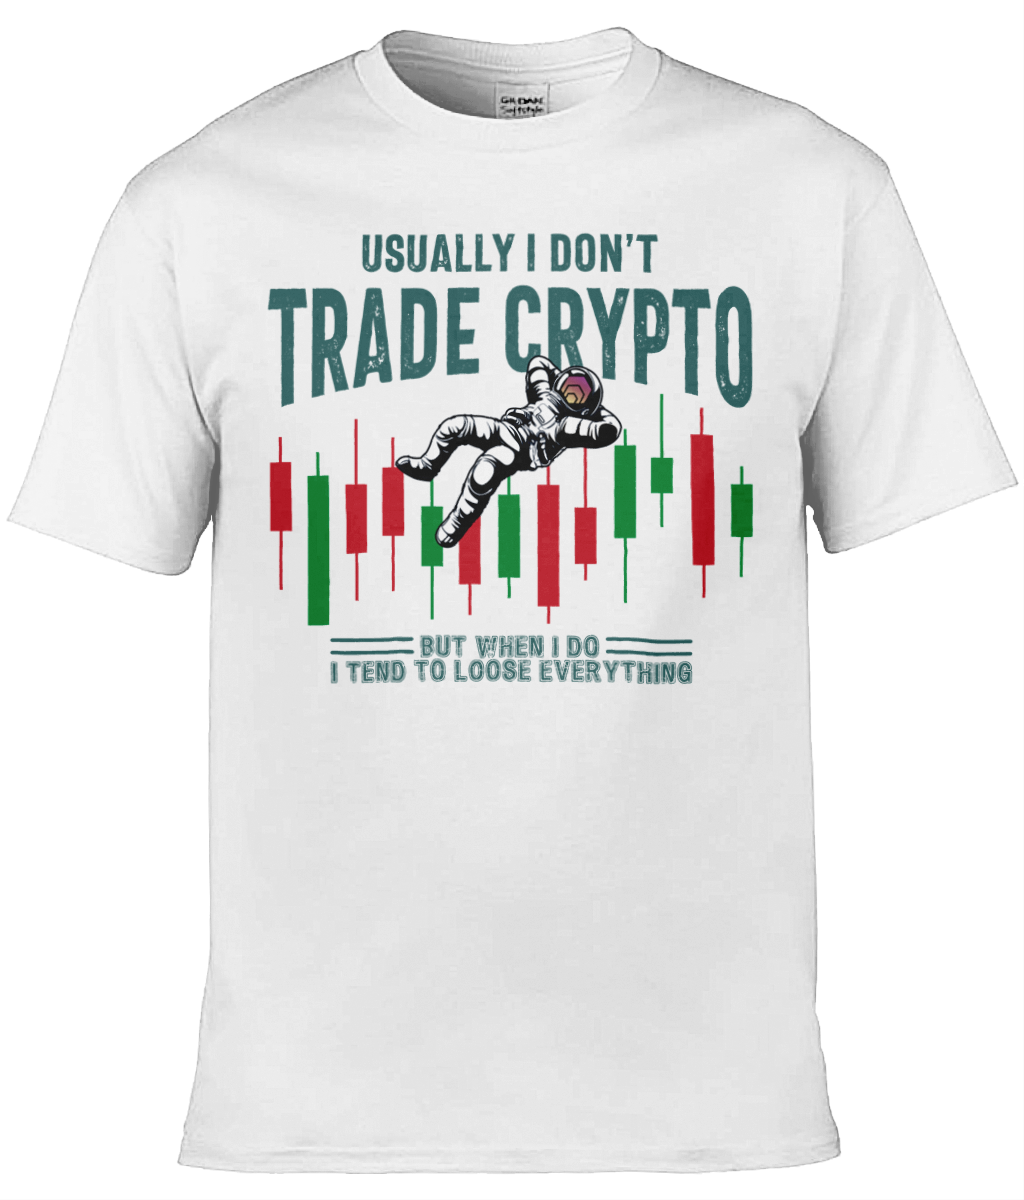 Don't Trade Crypto T-shirt, Unisex T-shirt